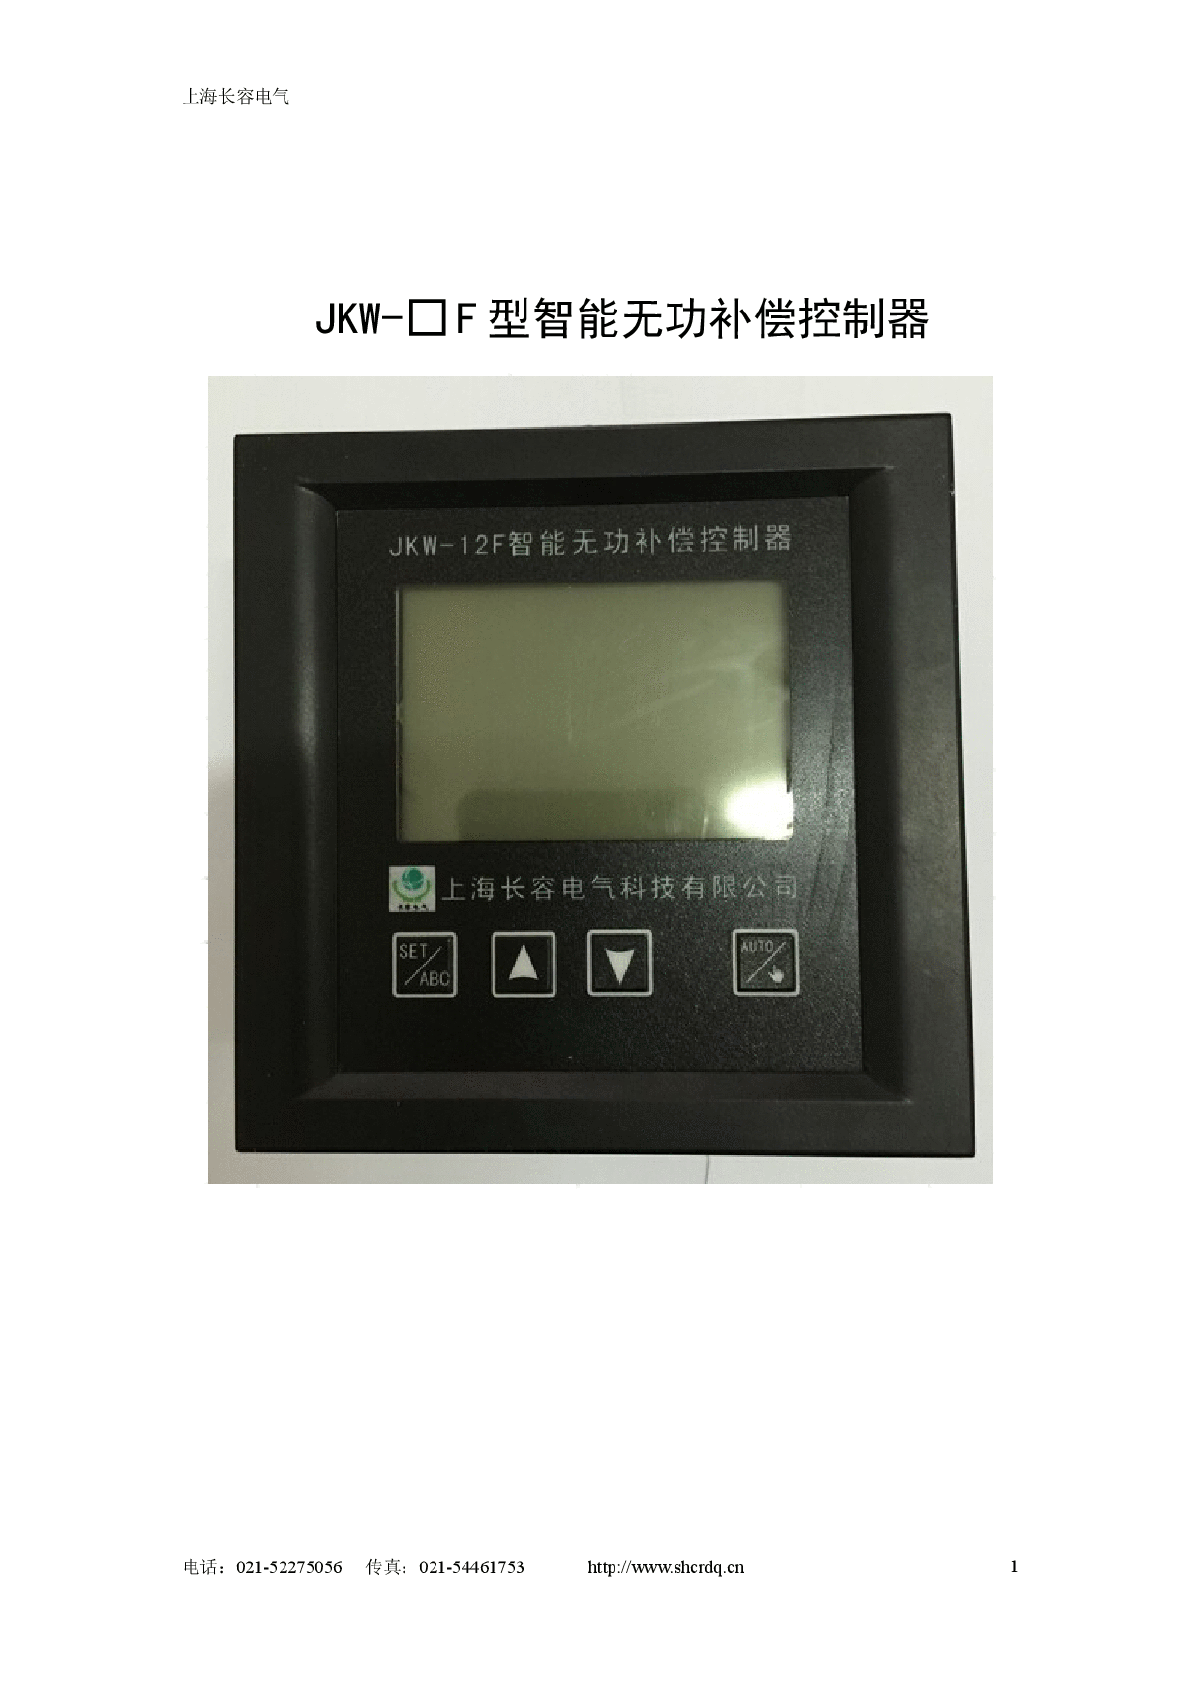 JKW-□F型智能无功补偿控制器